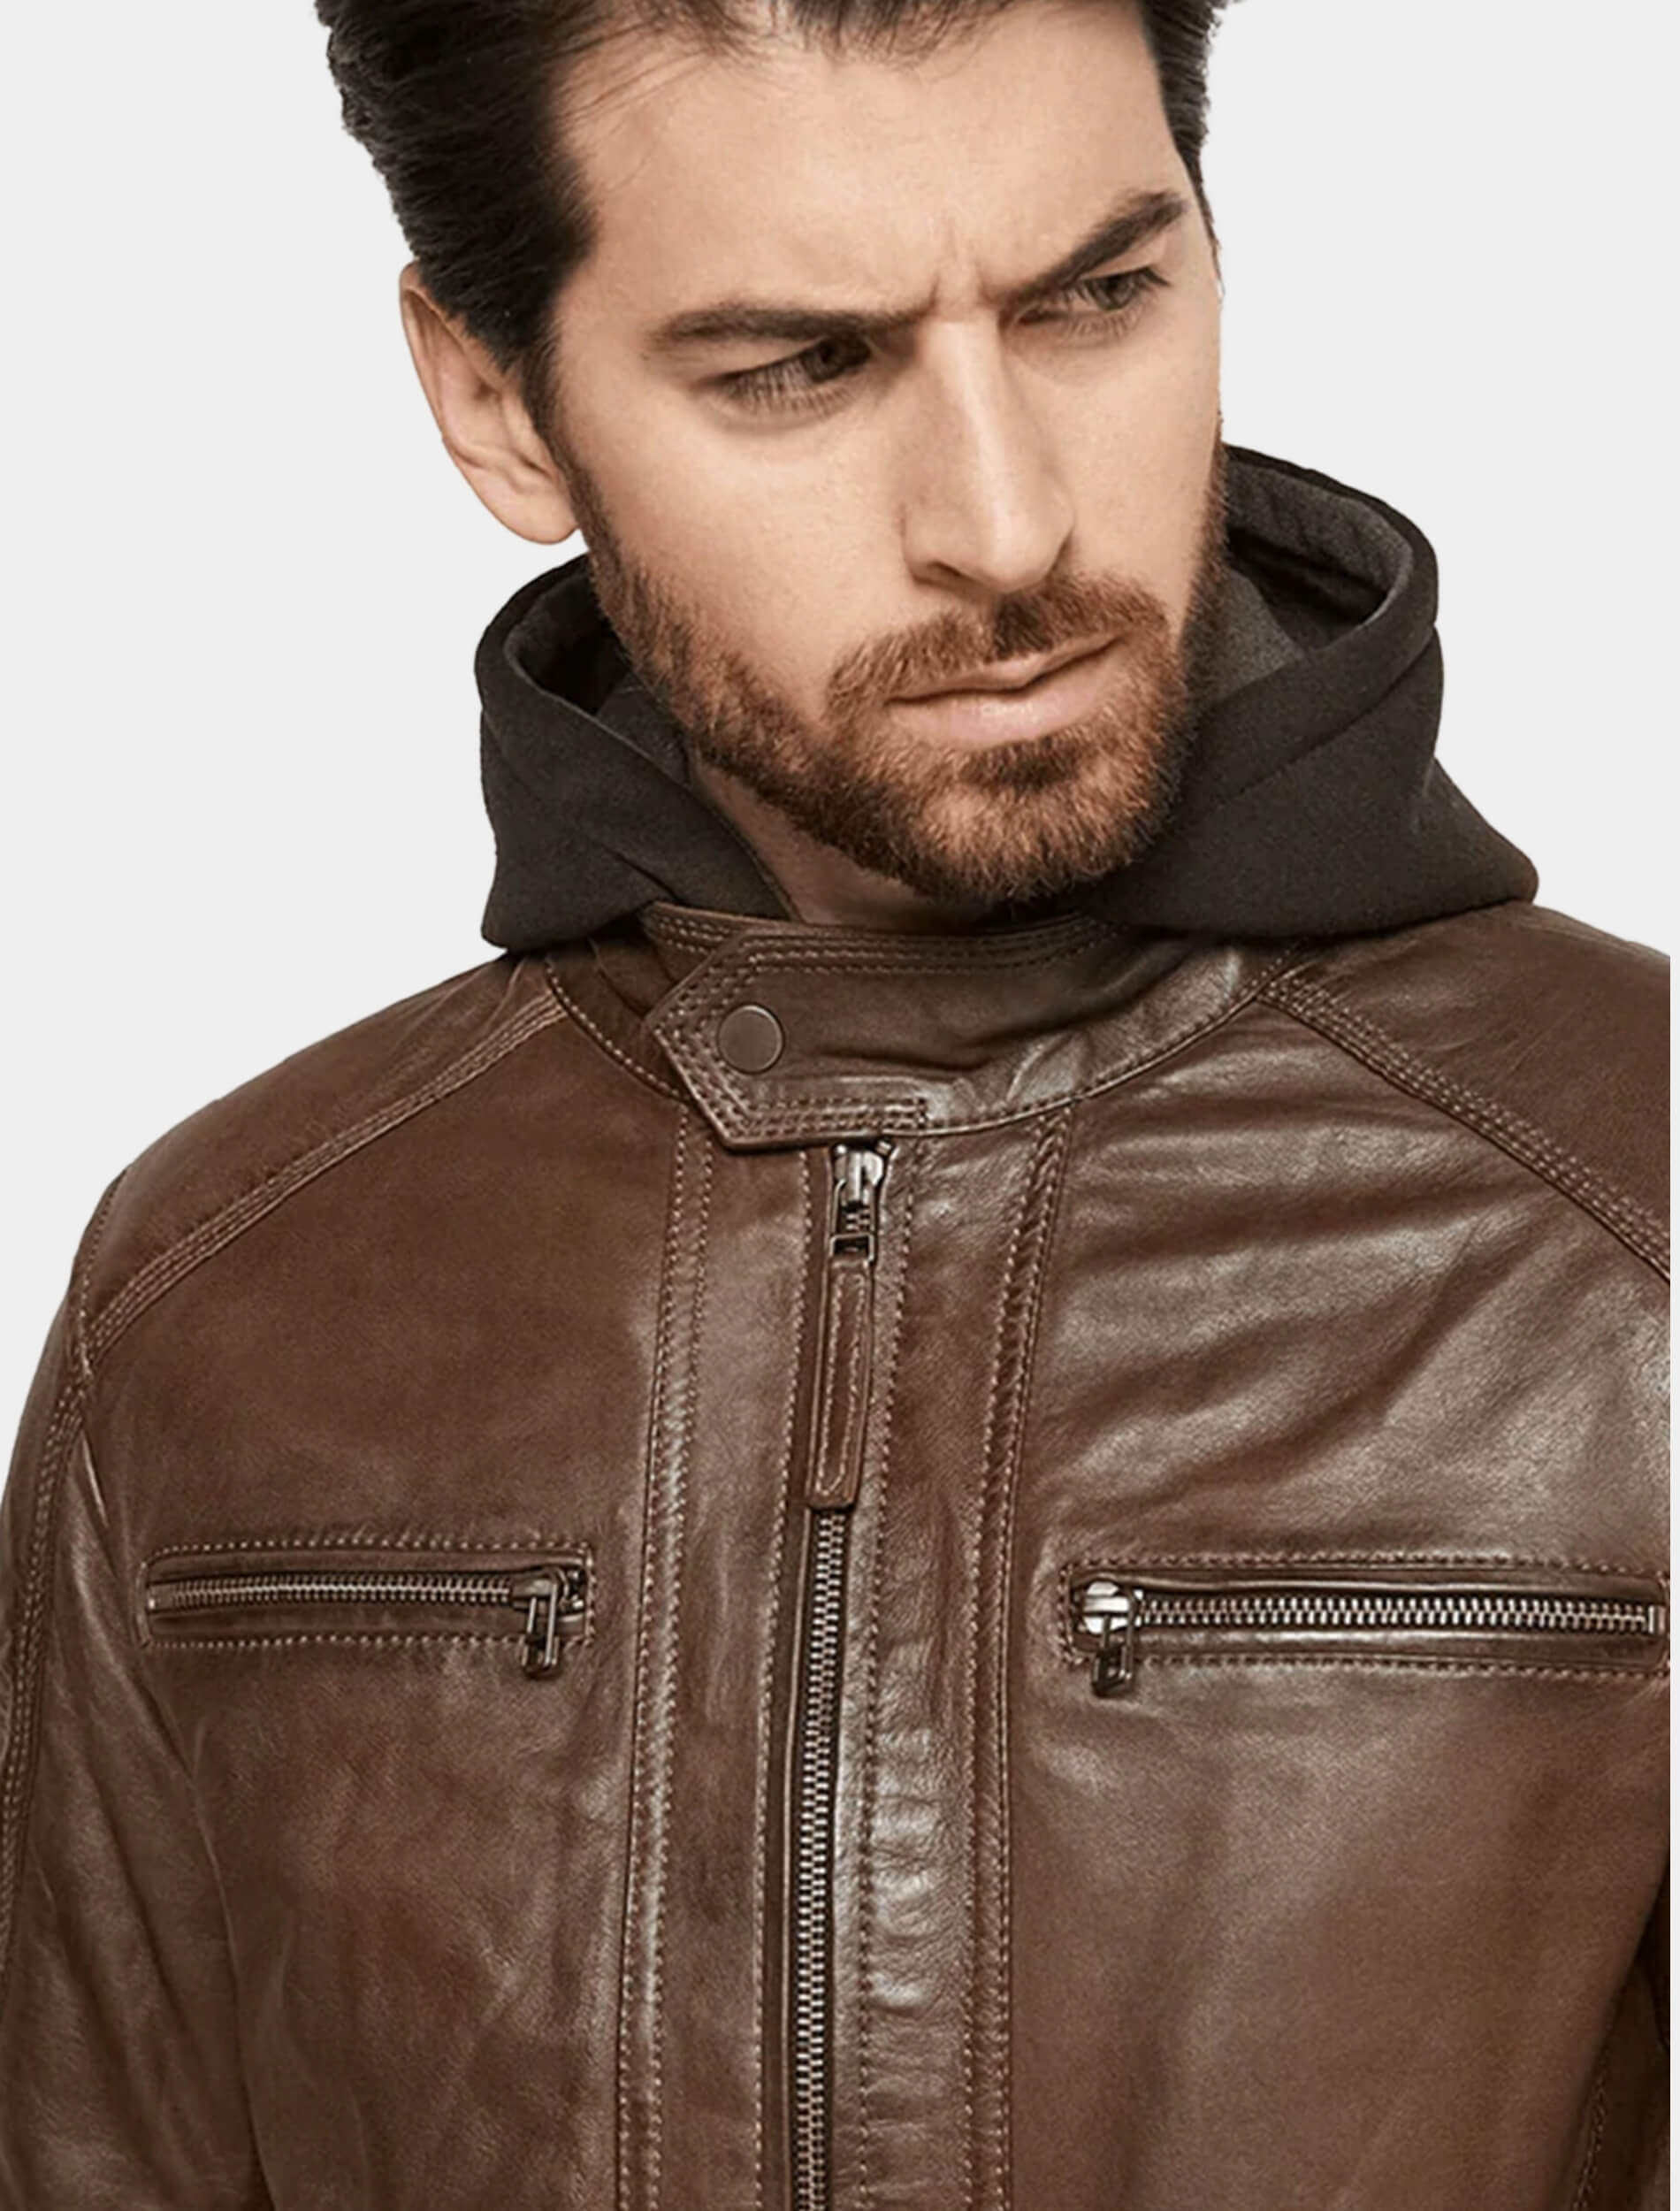 Erick Dark Brown Hooded Leather Jacket Detail Image